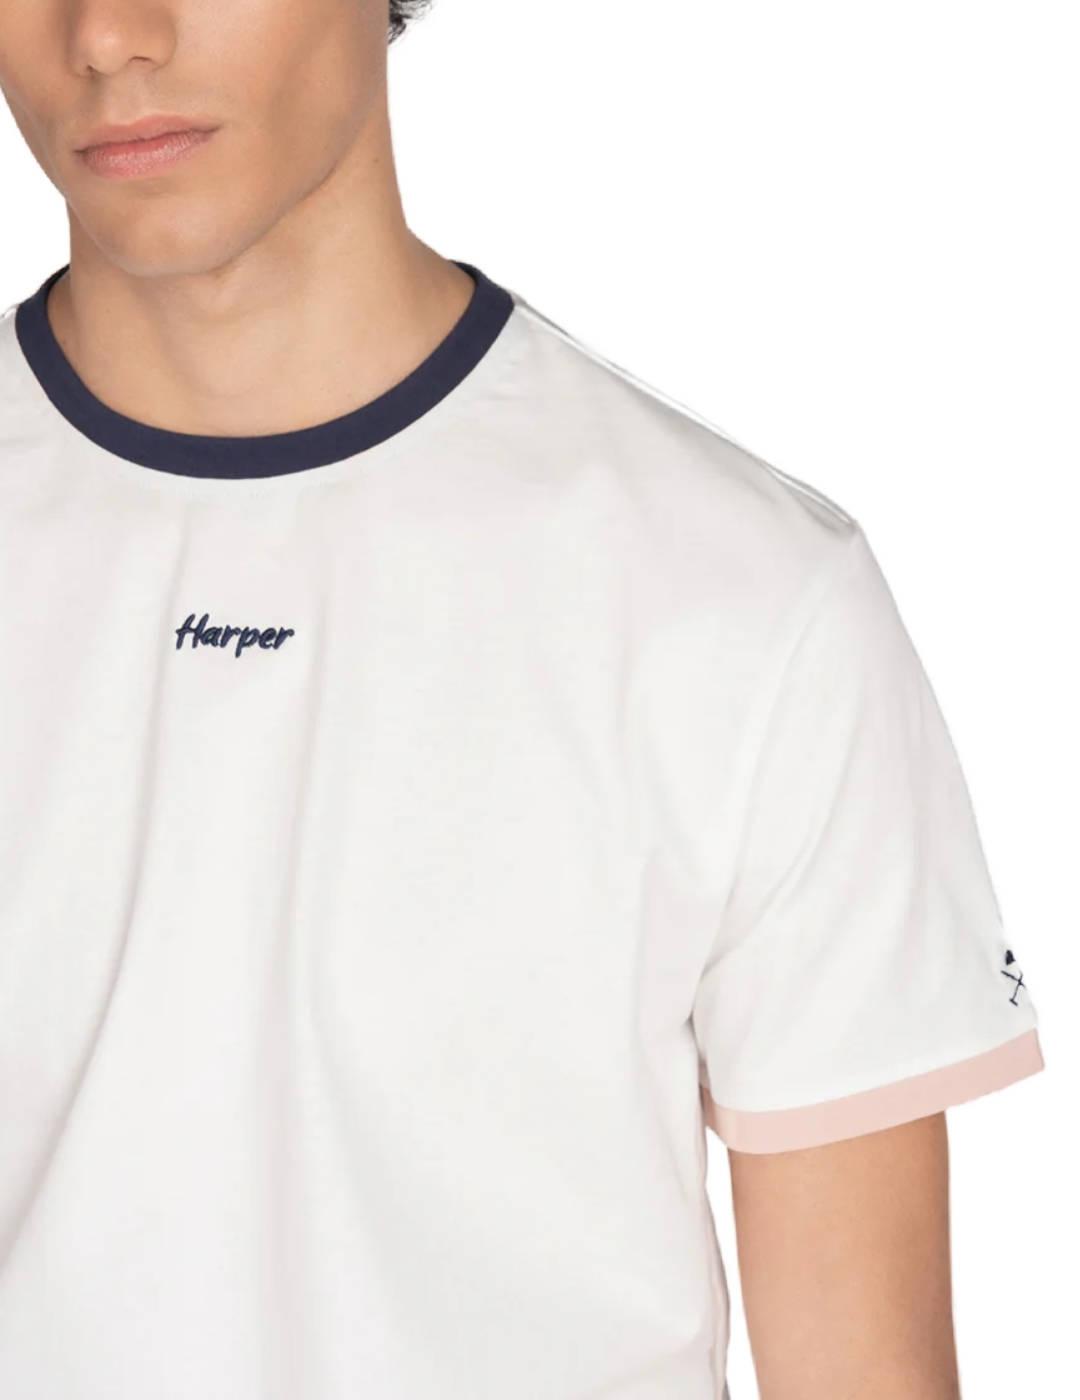 Camiseta Harper Malibú blanca manga corta colores hombre